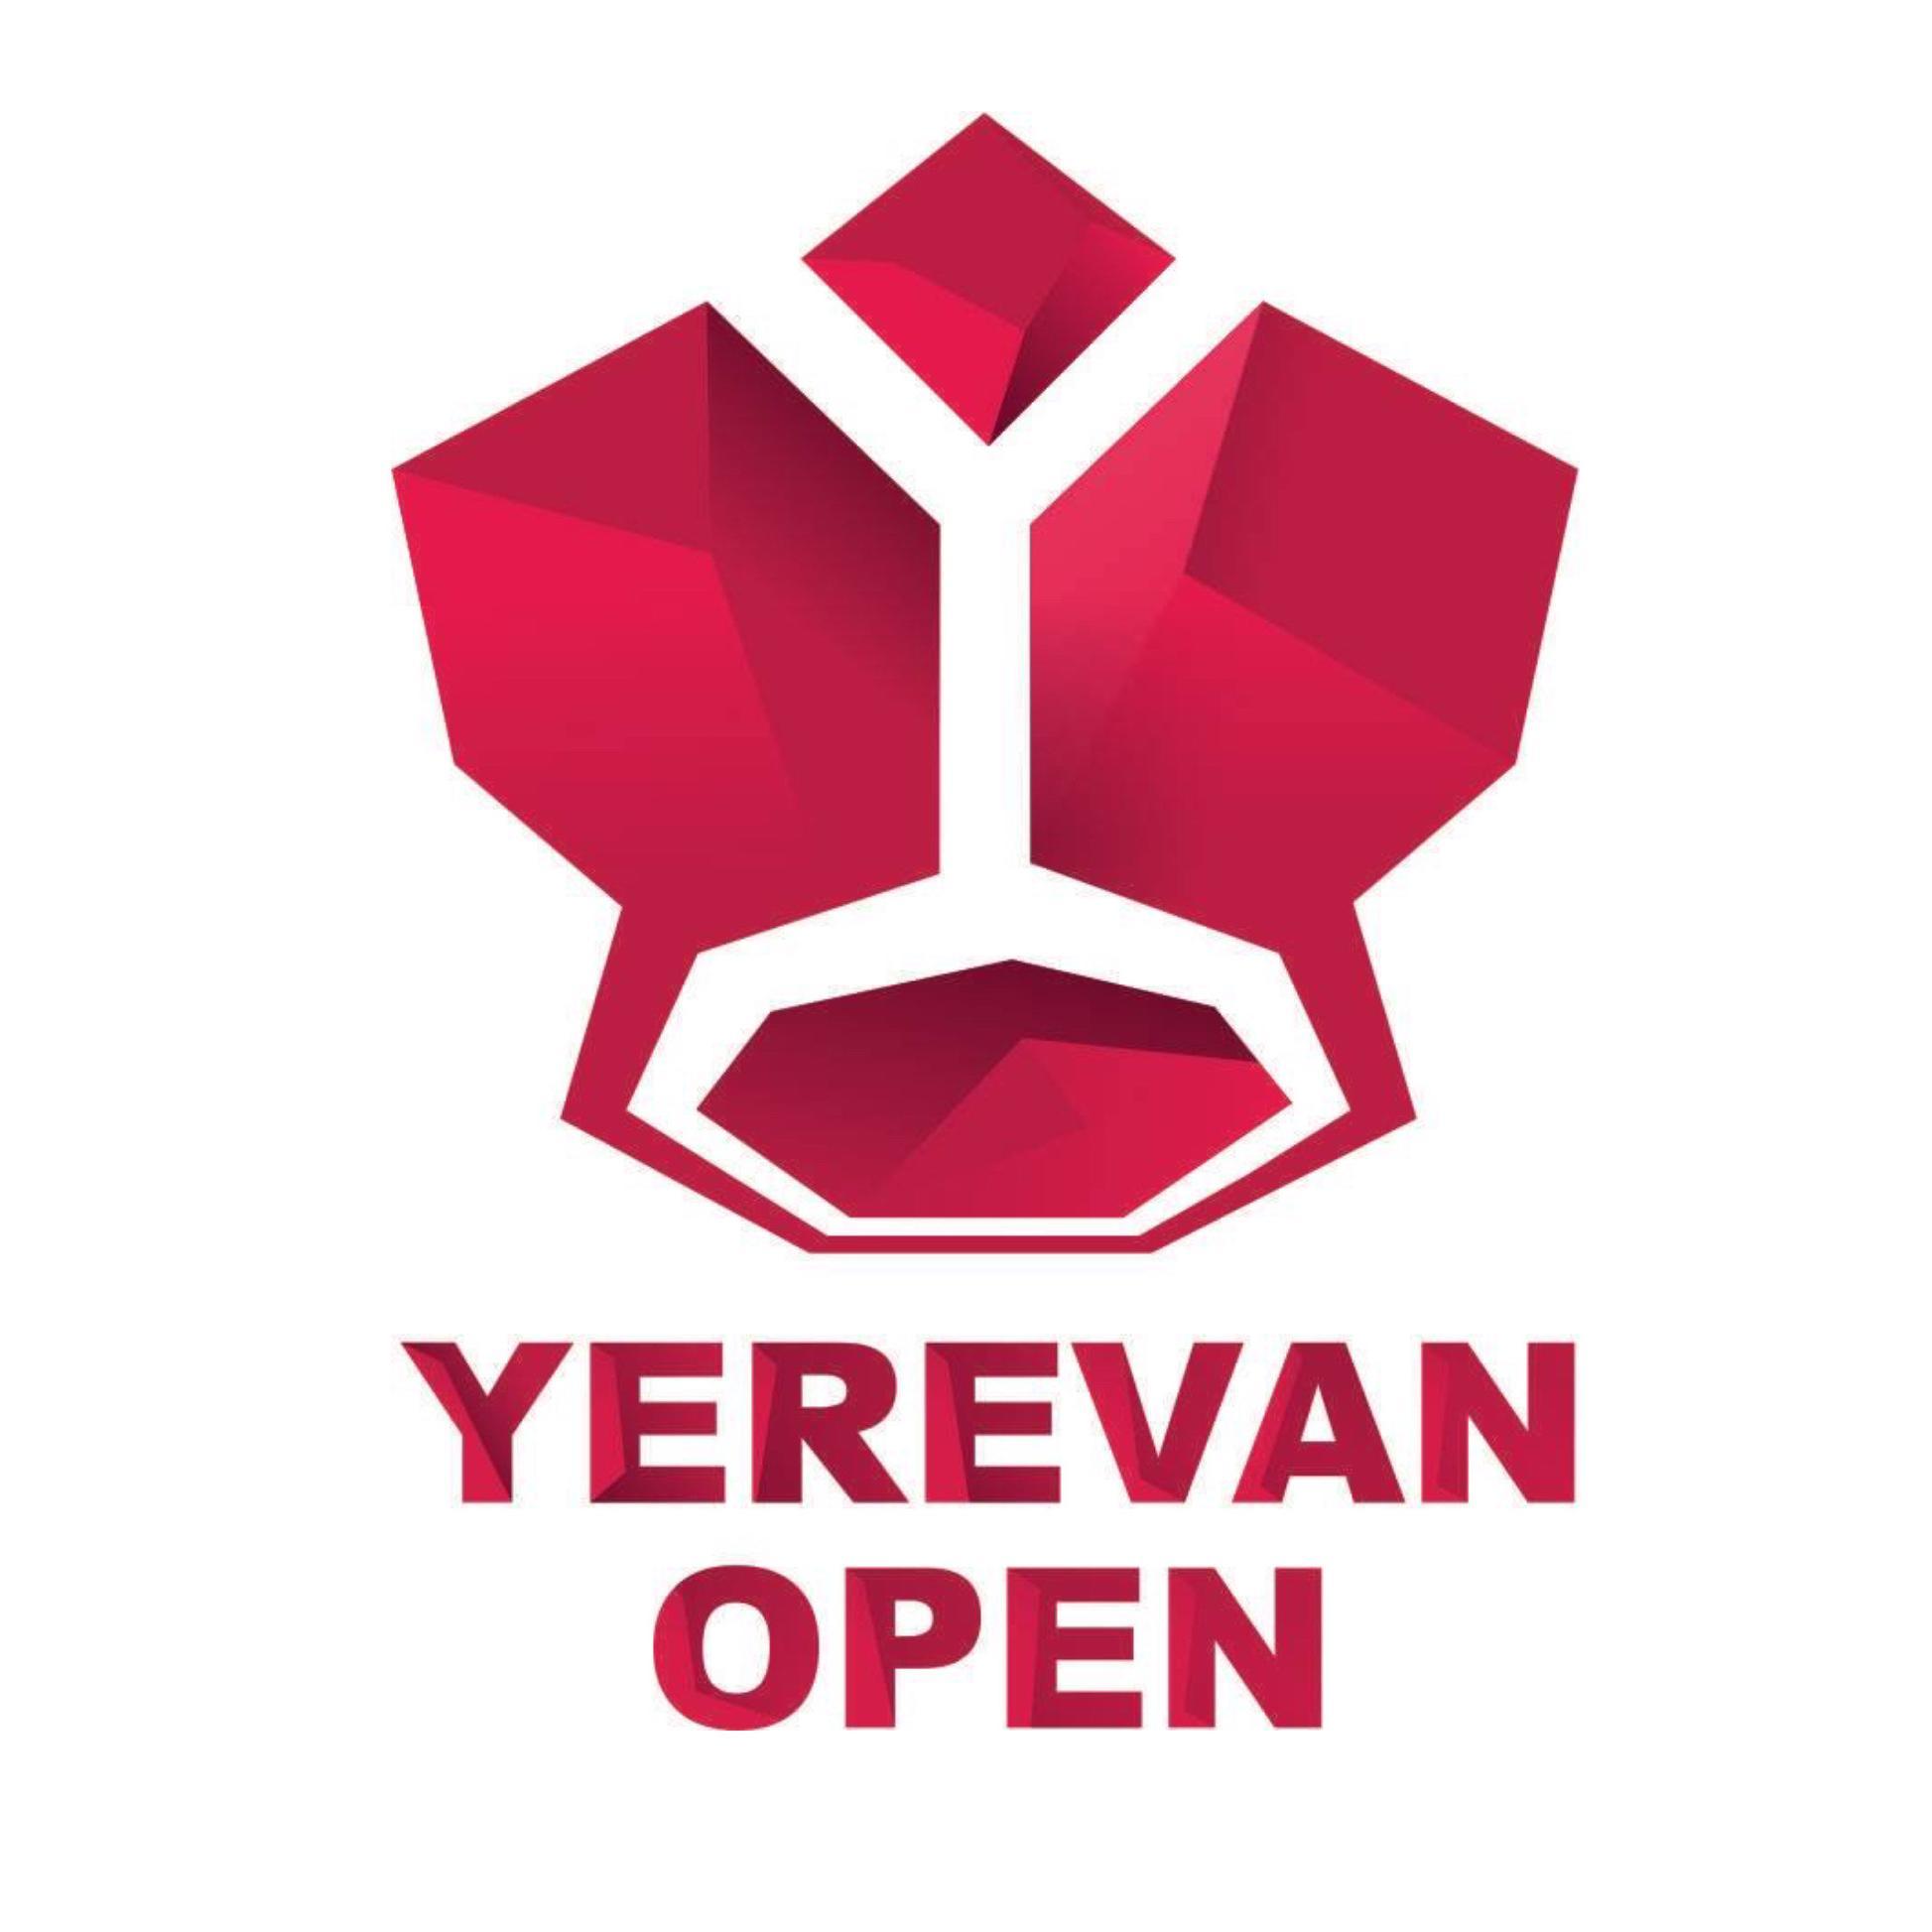 3rd Yerevan Open International Chess Tournament Regulations